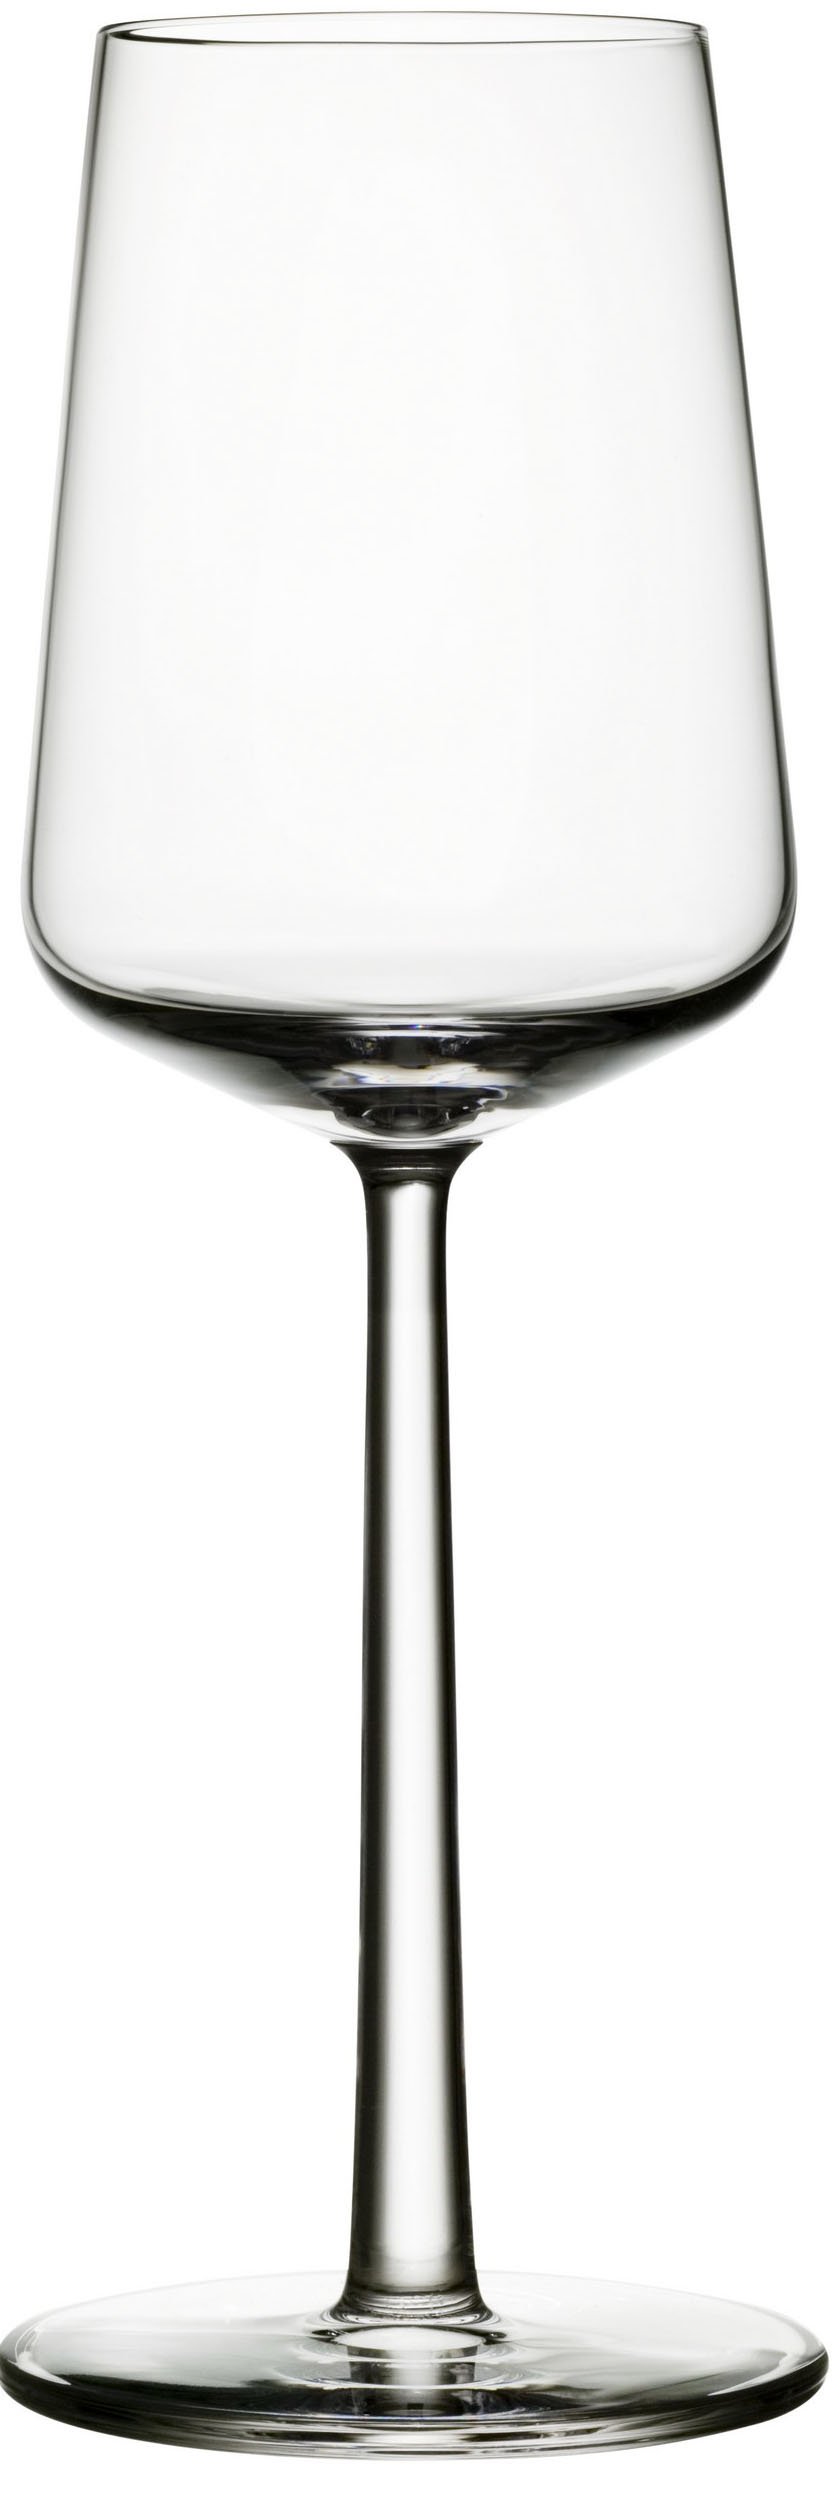 Iittala Essence White Wine Glass 33cl 11.16oz - Set of 4